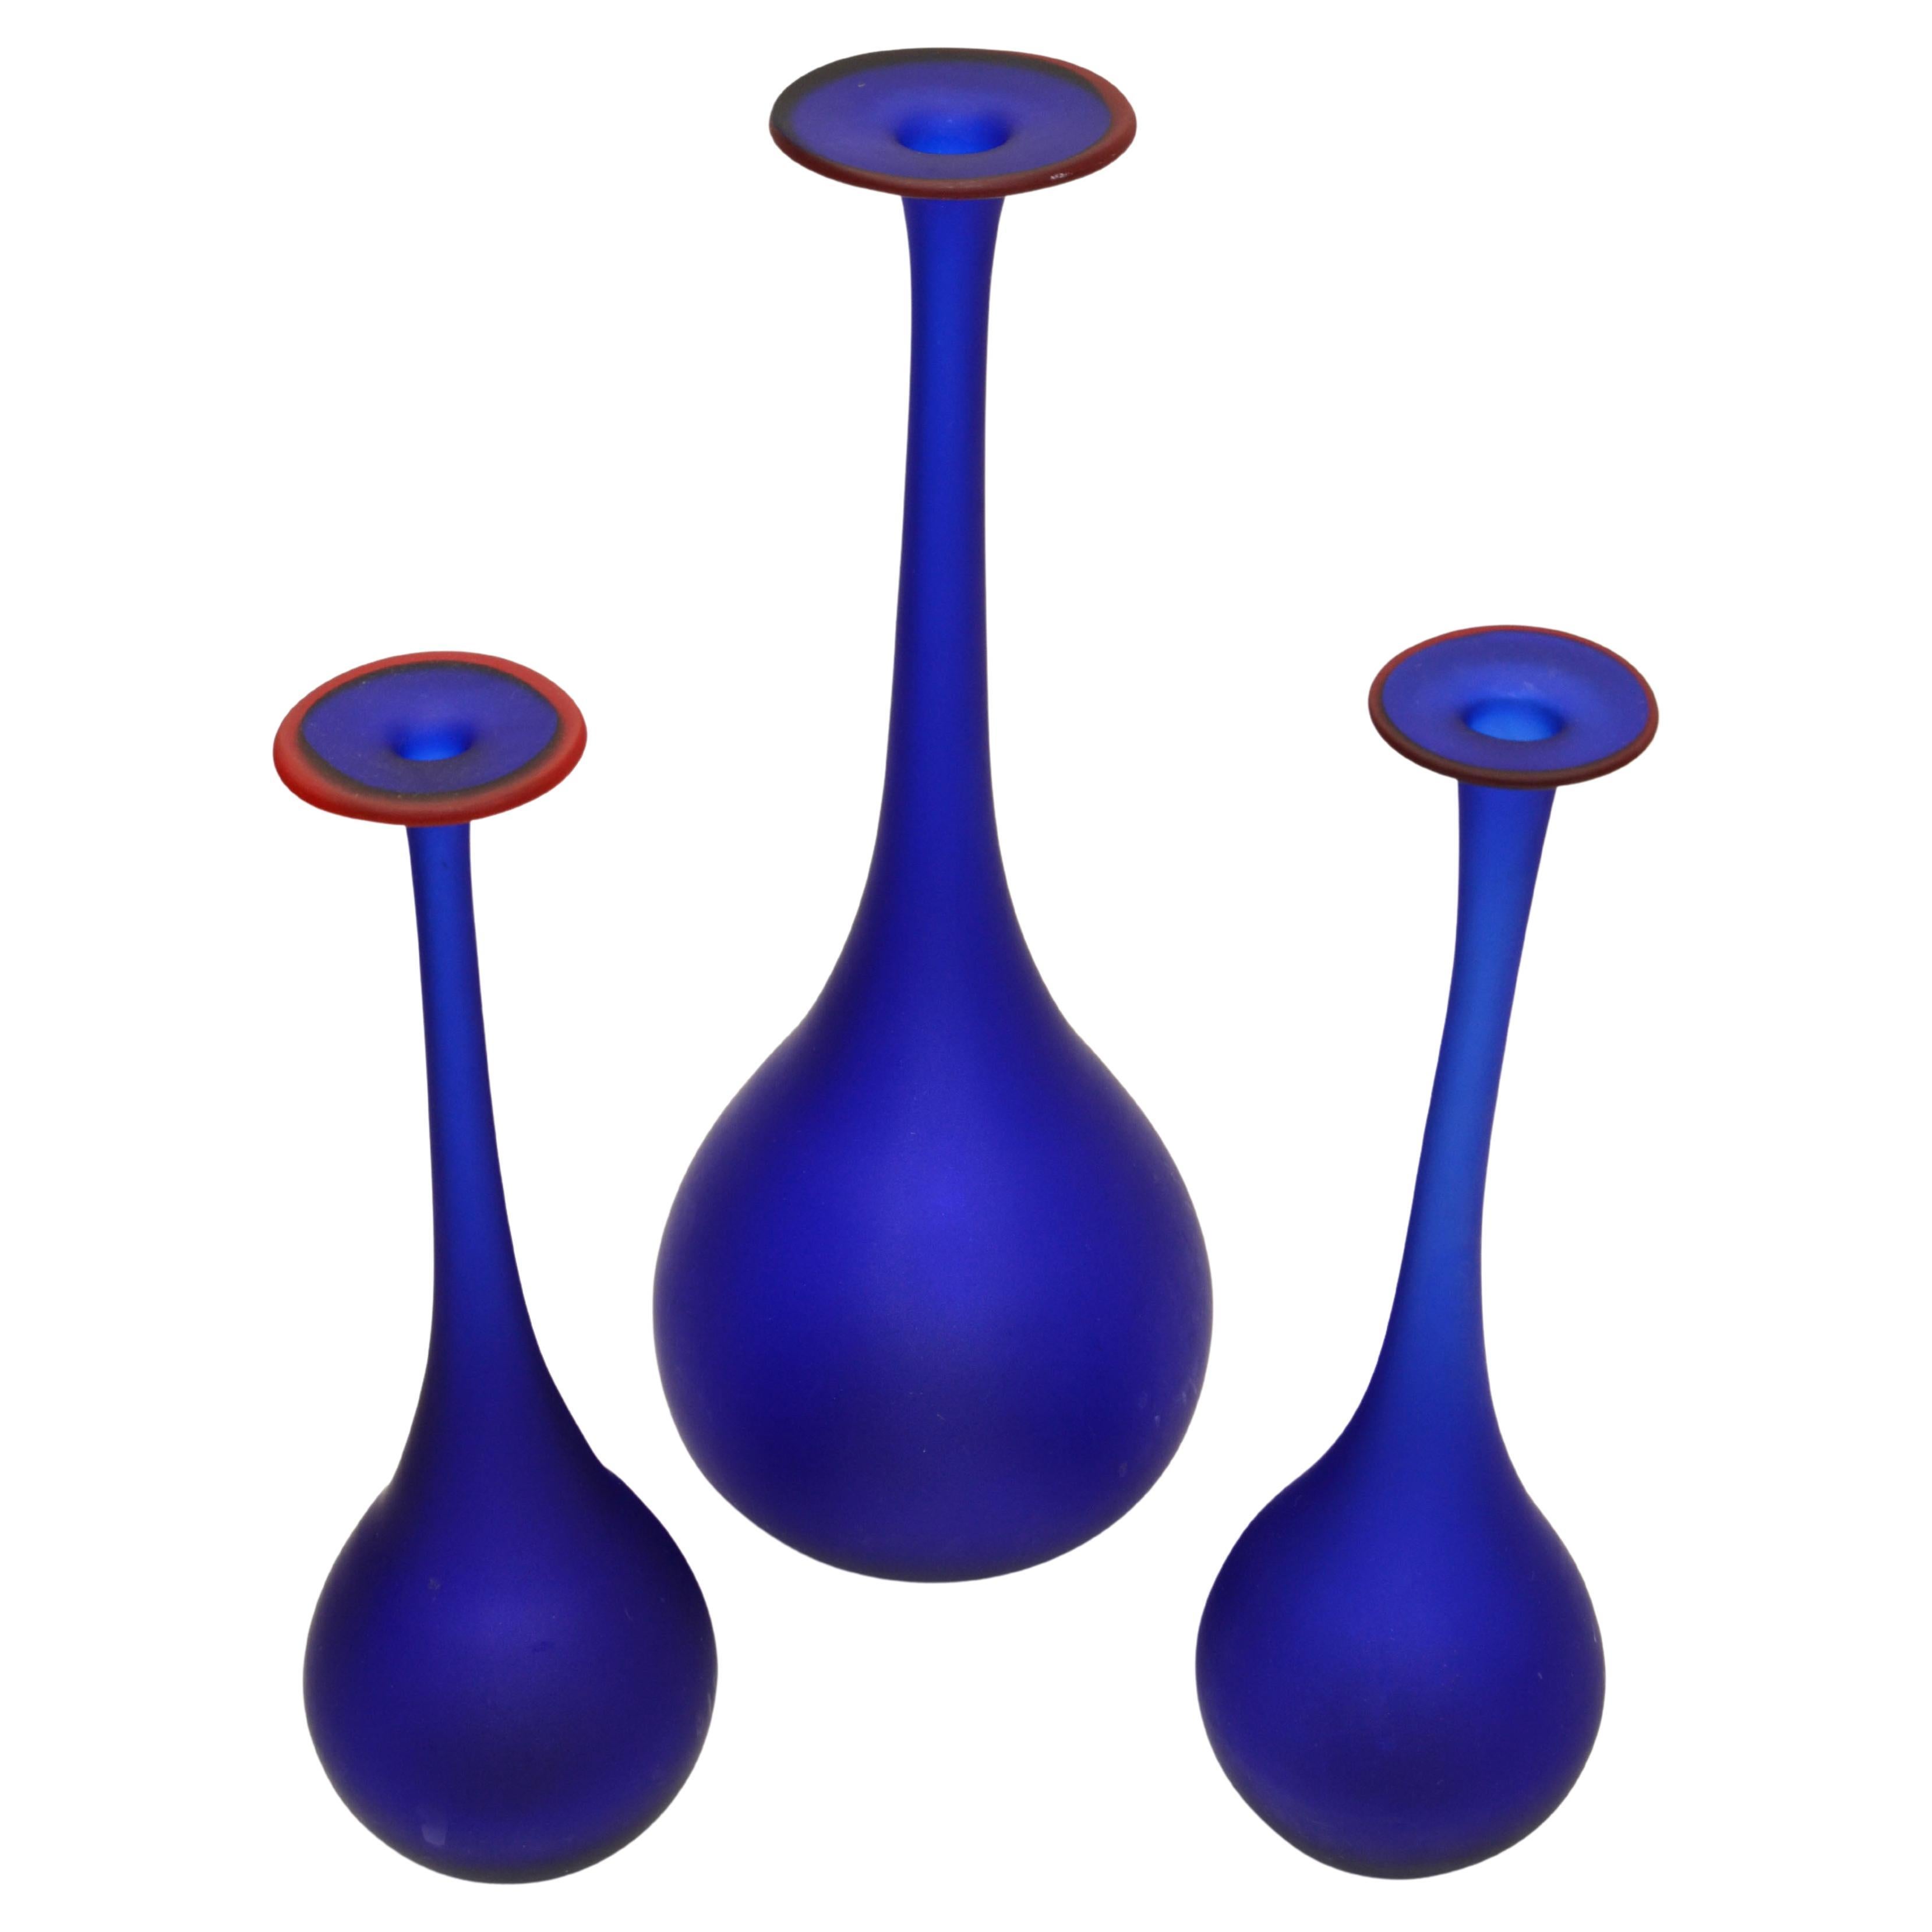 3 Nesting Vases Moretti Style Translucent Blue & Red Satin Glass Bud Vases Italy For Sale